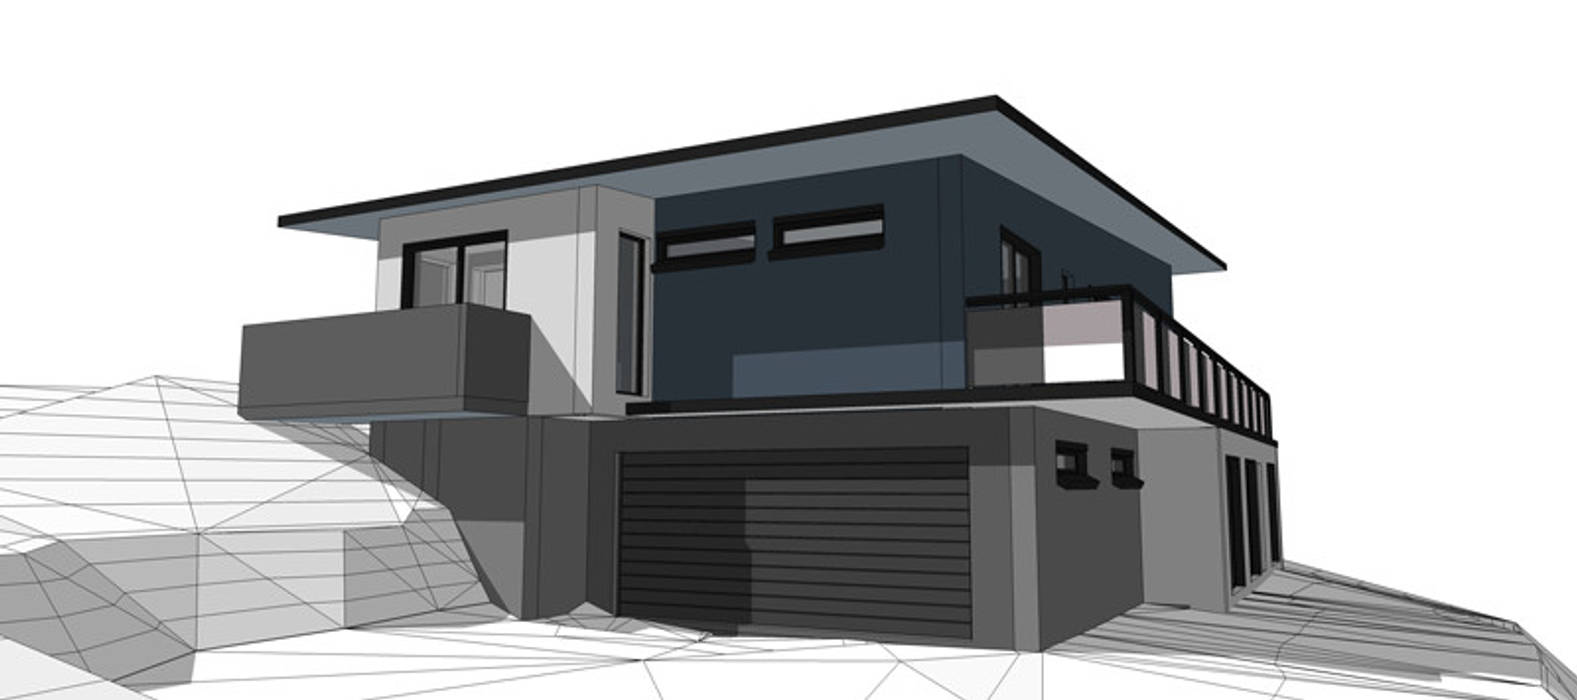 New house A4AC Architects Single family home Bricks knysna,contemporary,house design